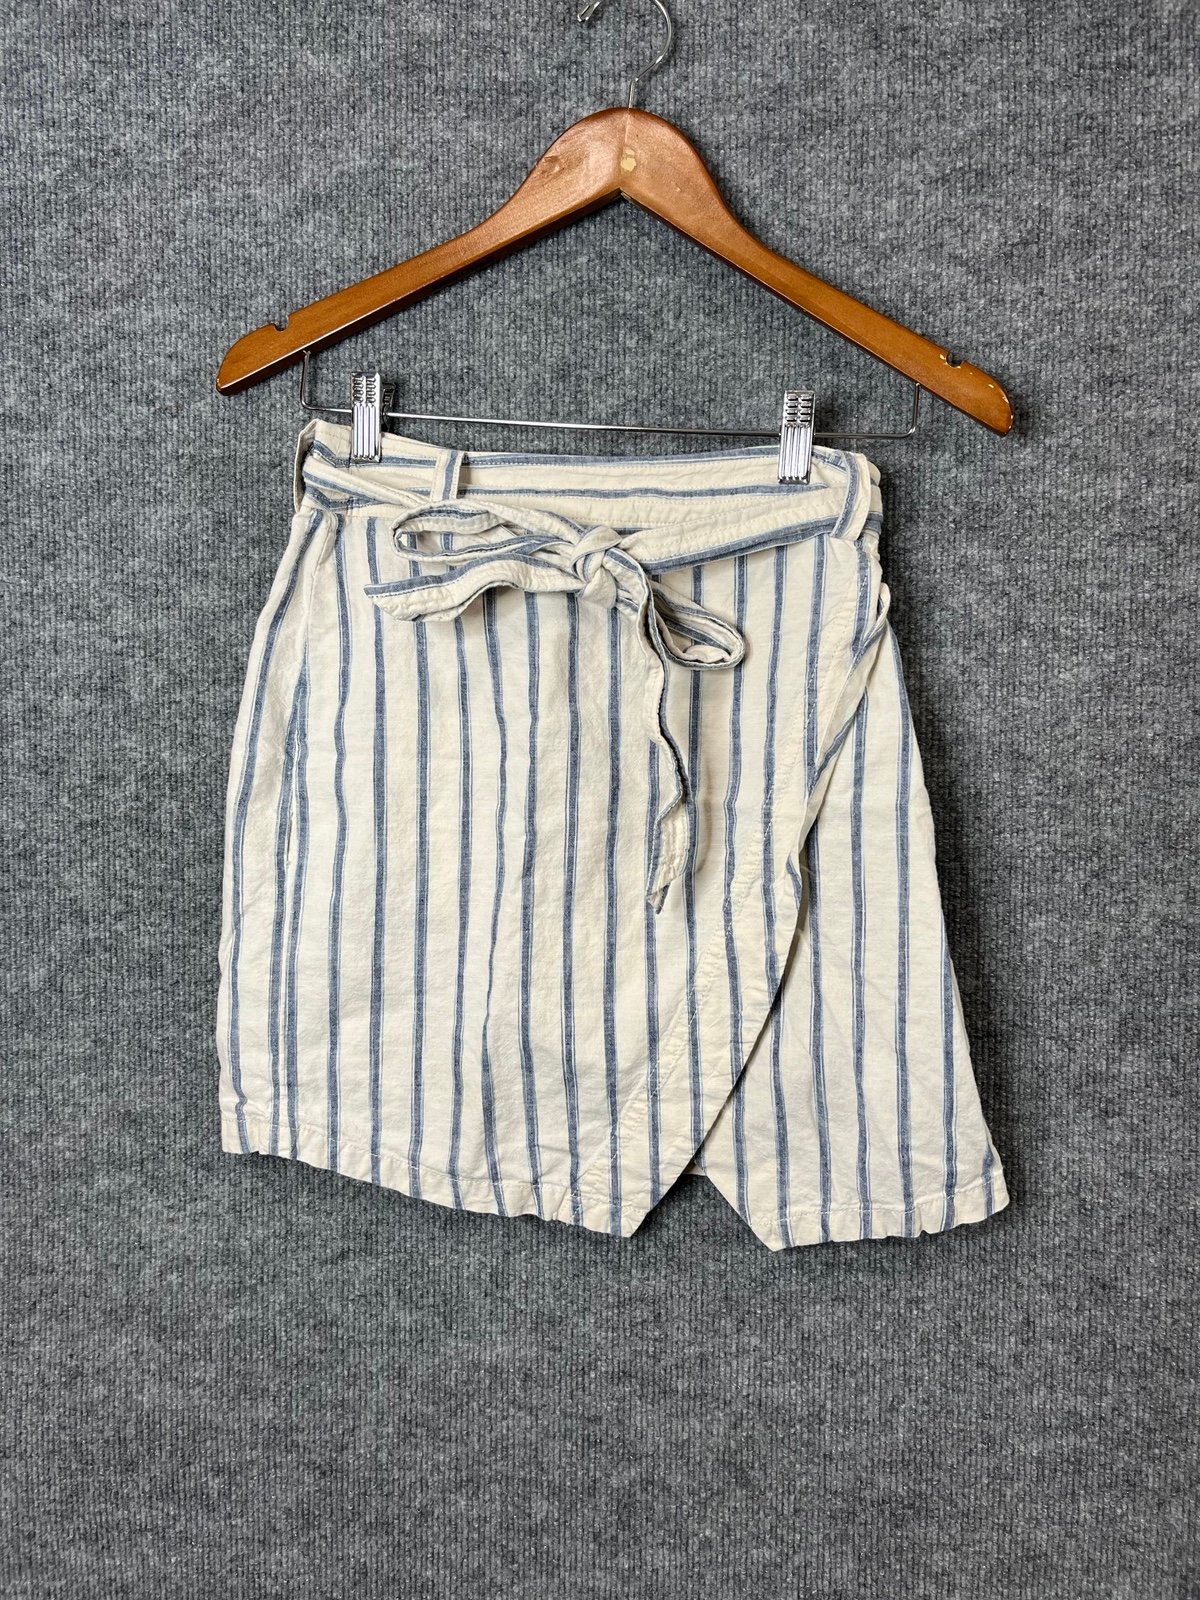 Nice Madewell portside striped linen mini skirt size sm